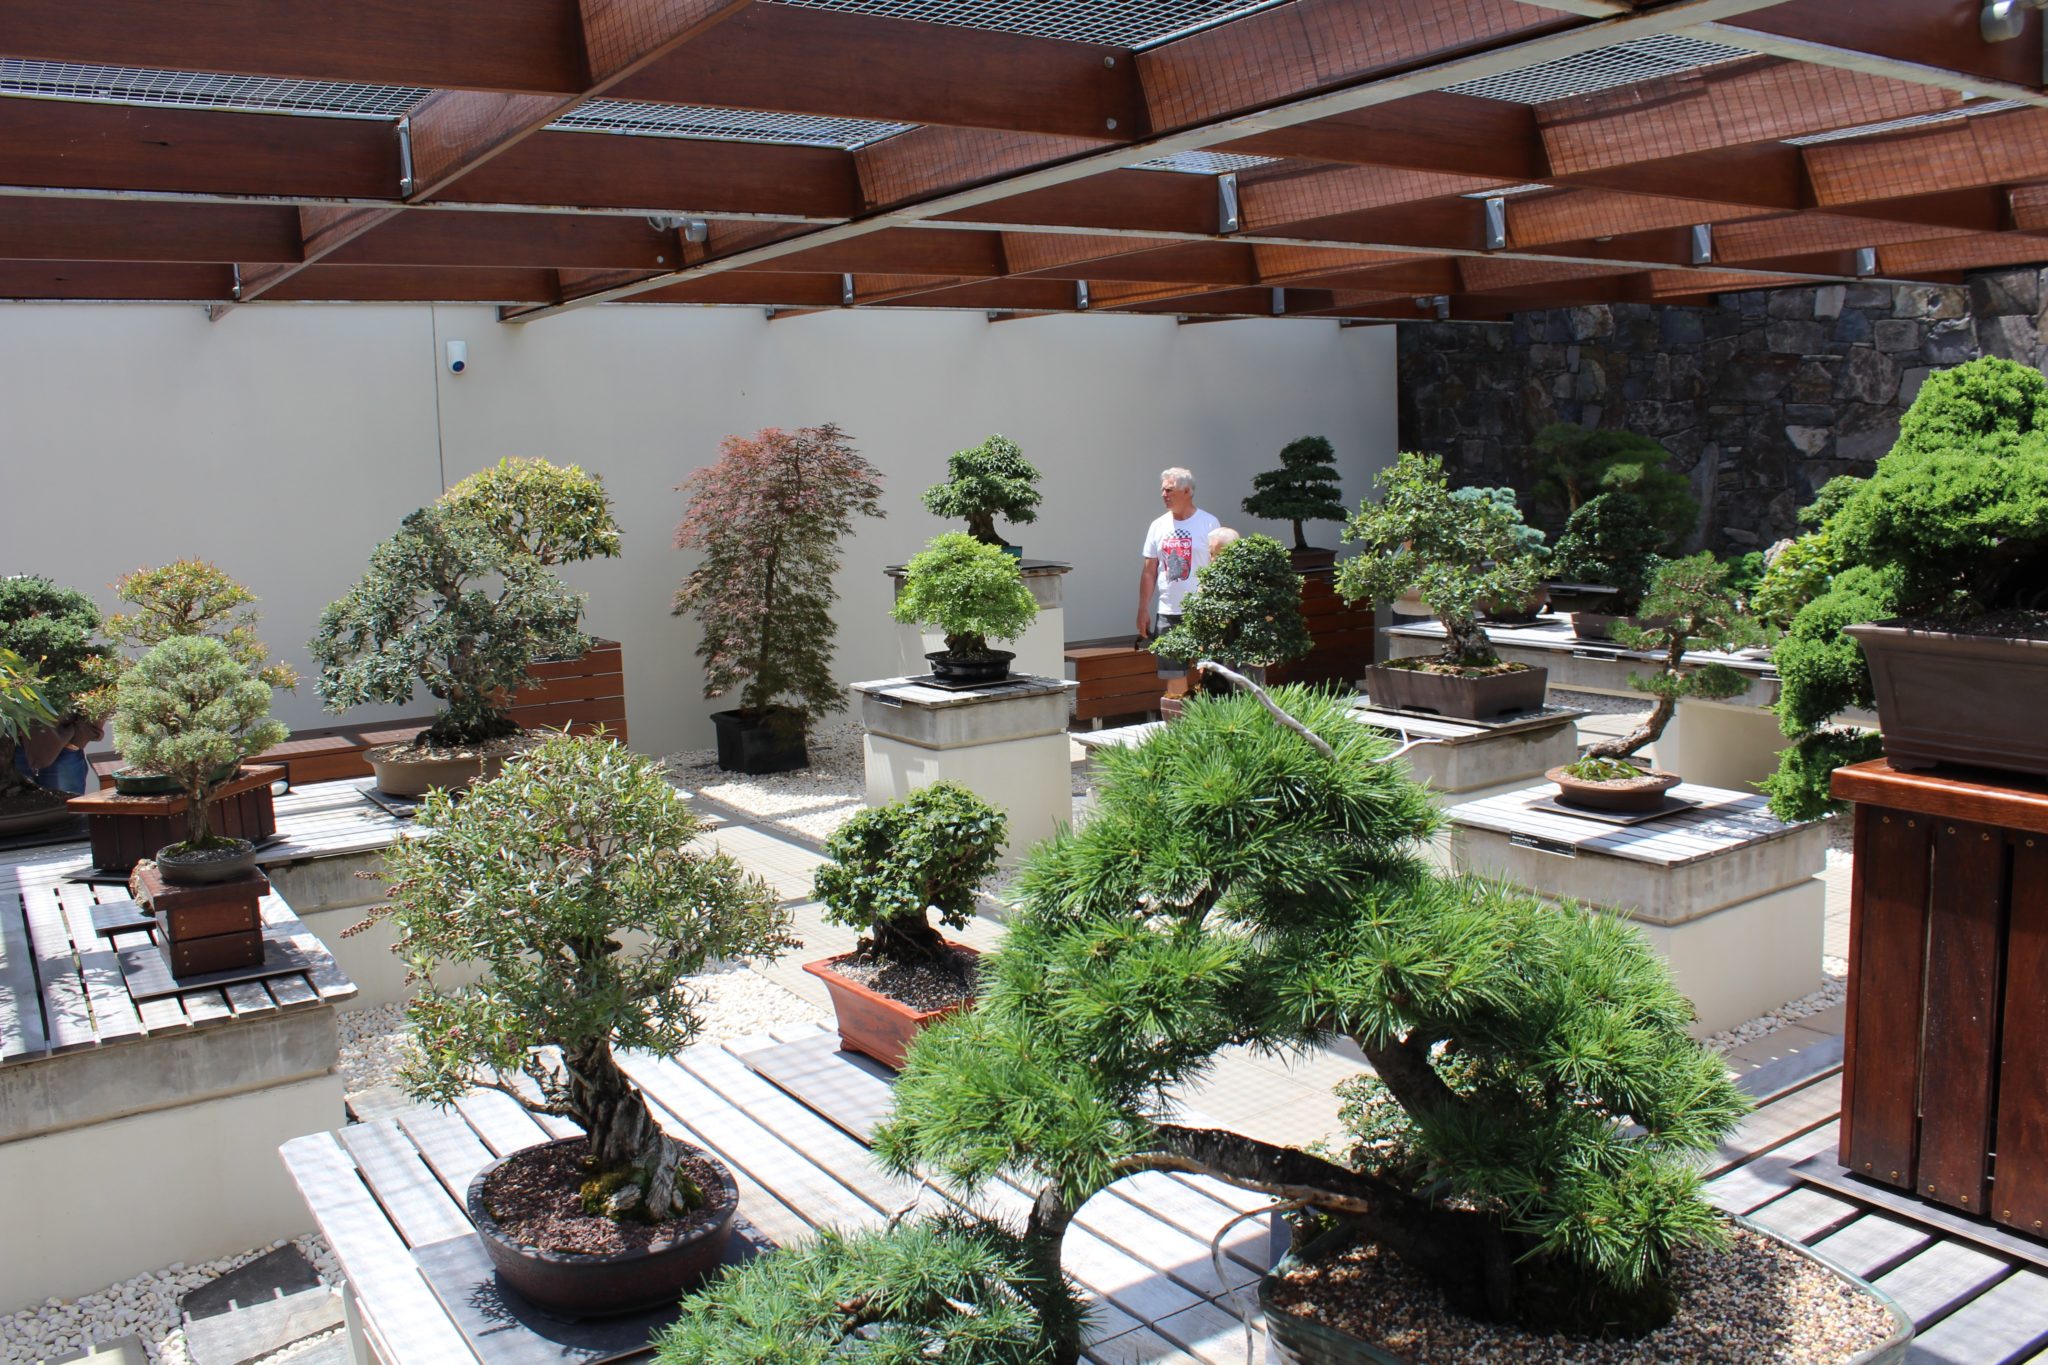 National Arboretum's bonsai garden